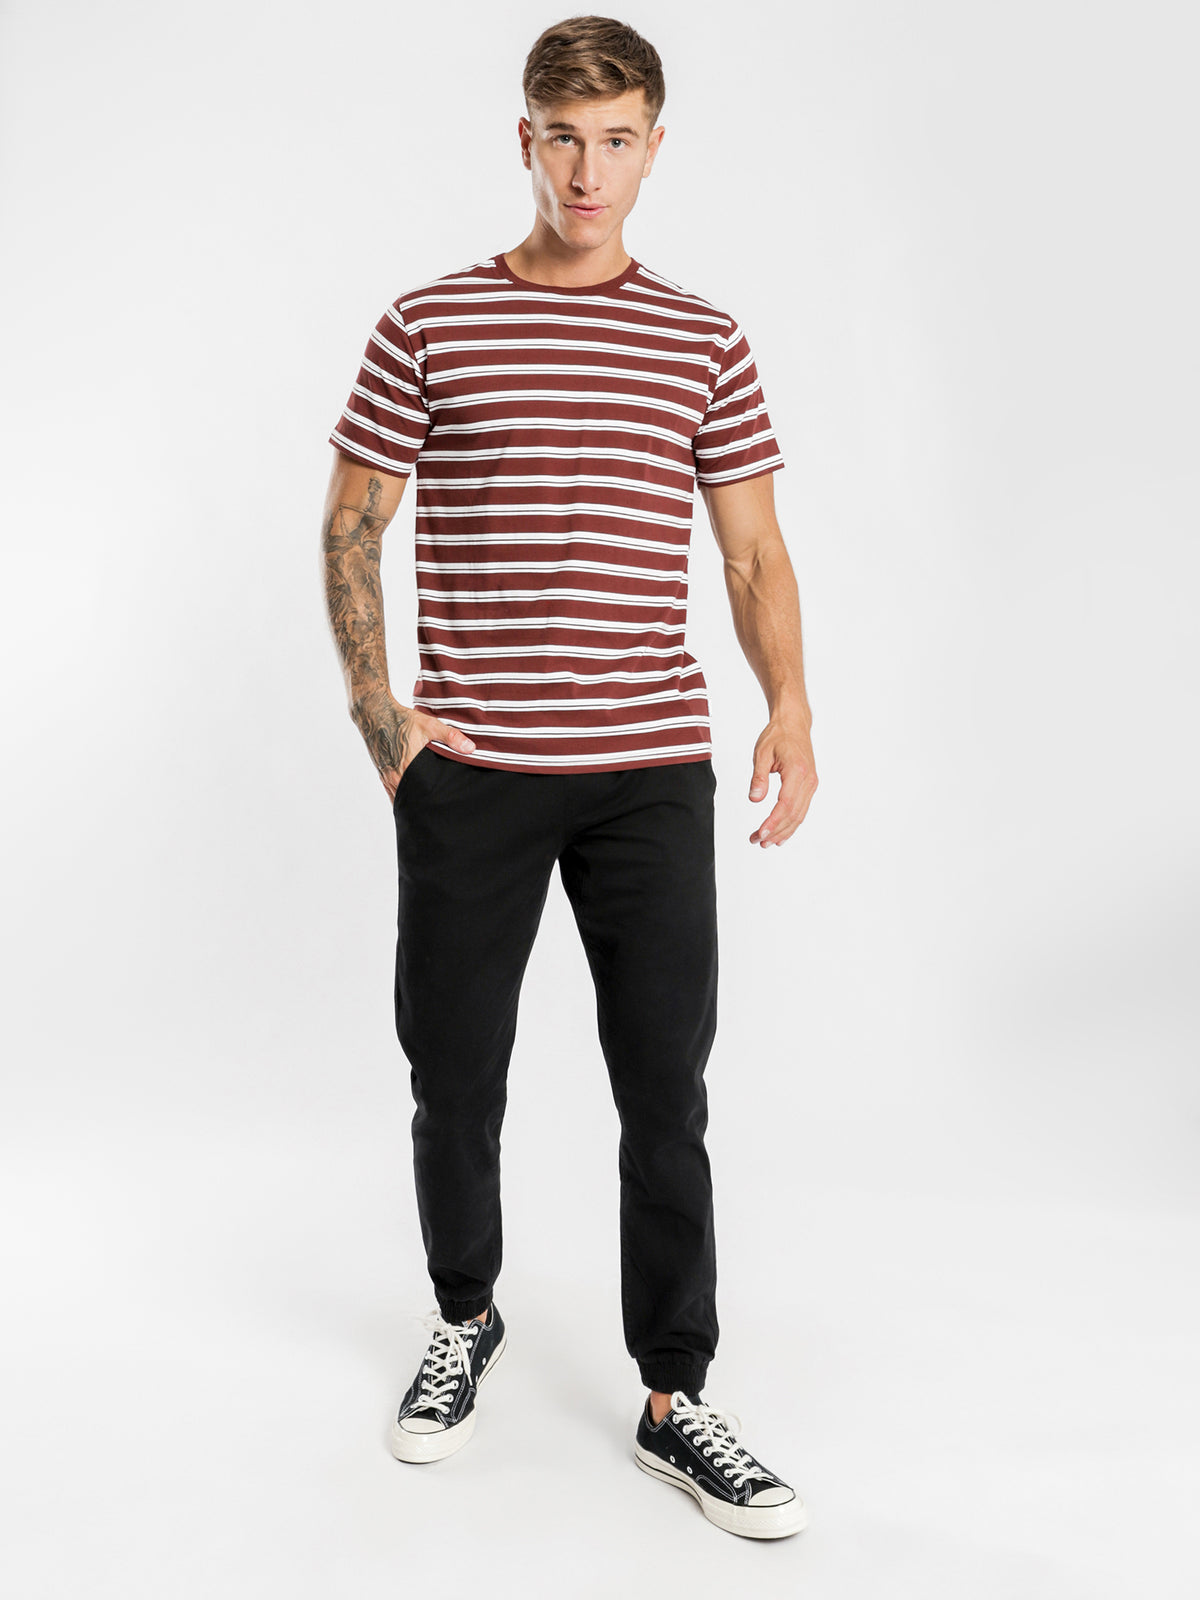 Cayo Short Sleeve Stripe T-Shirt in Wine